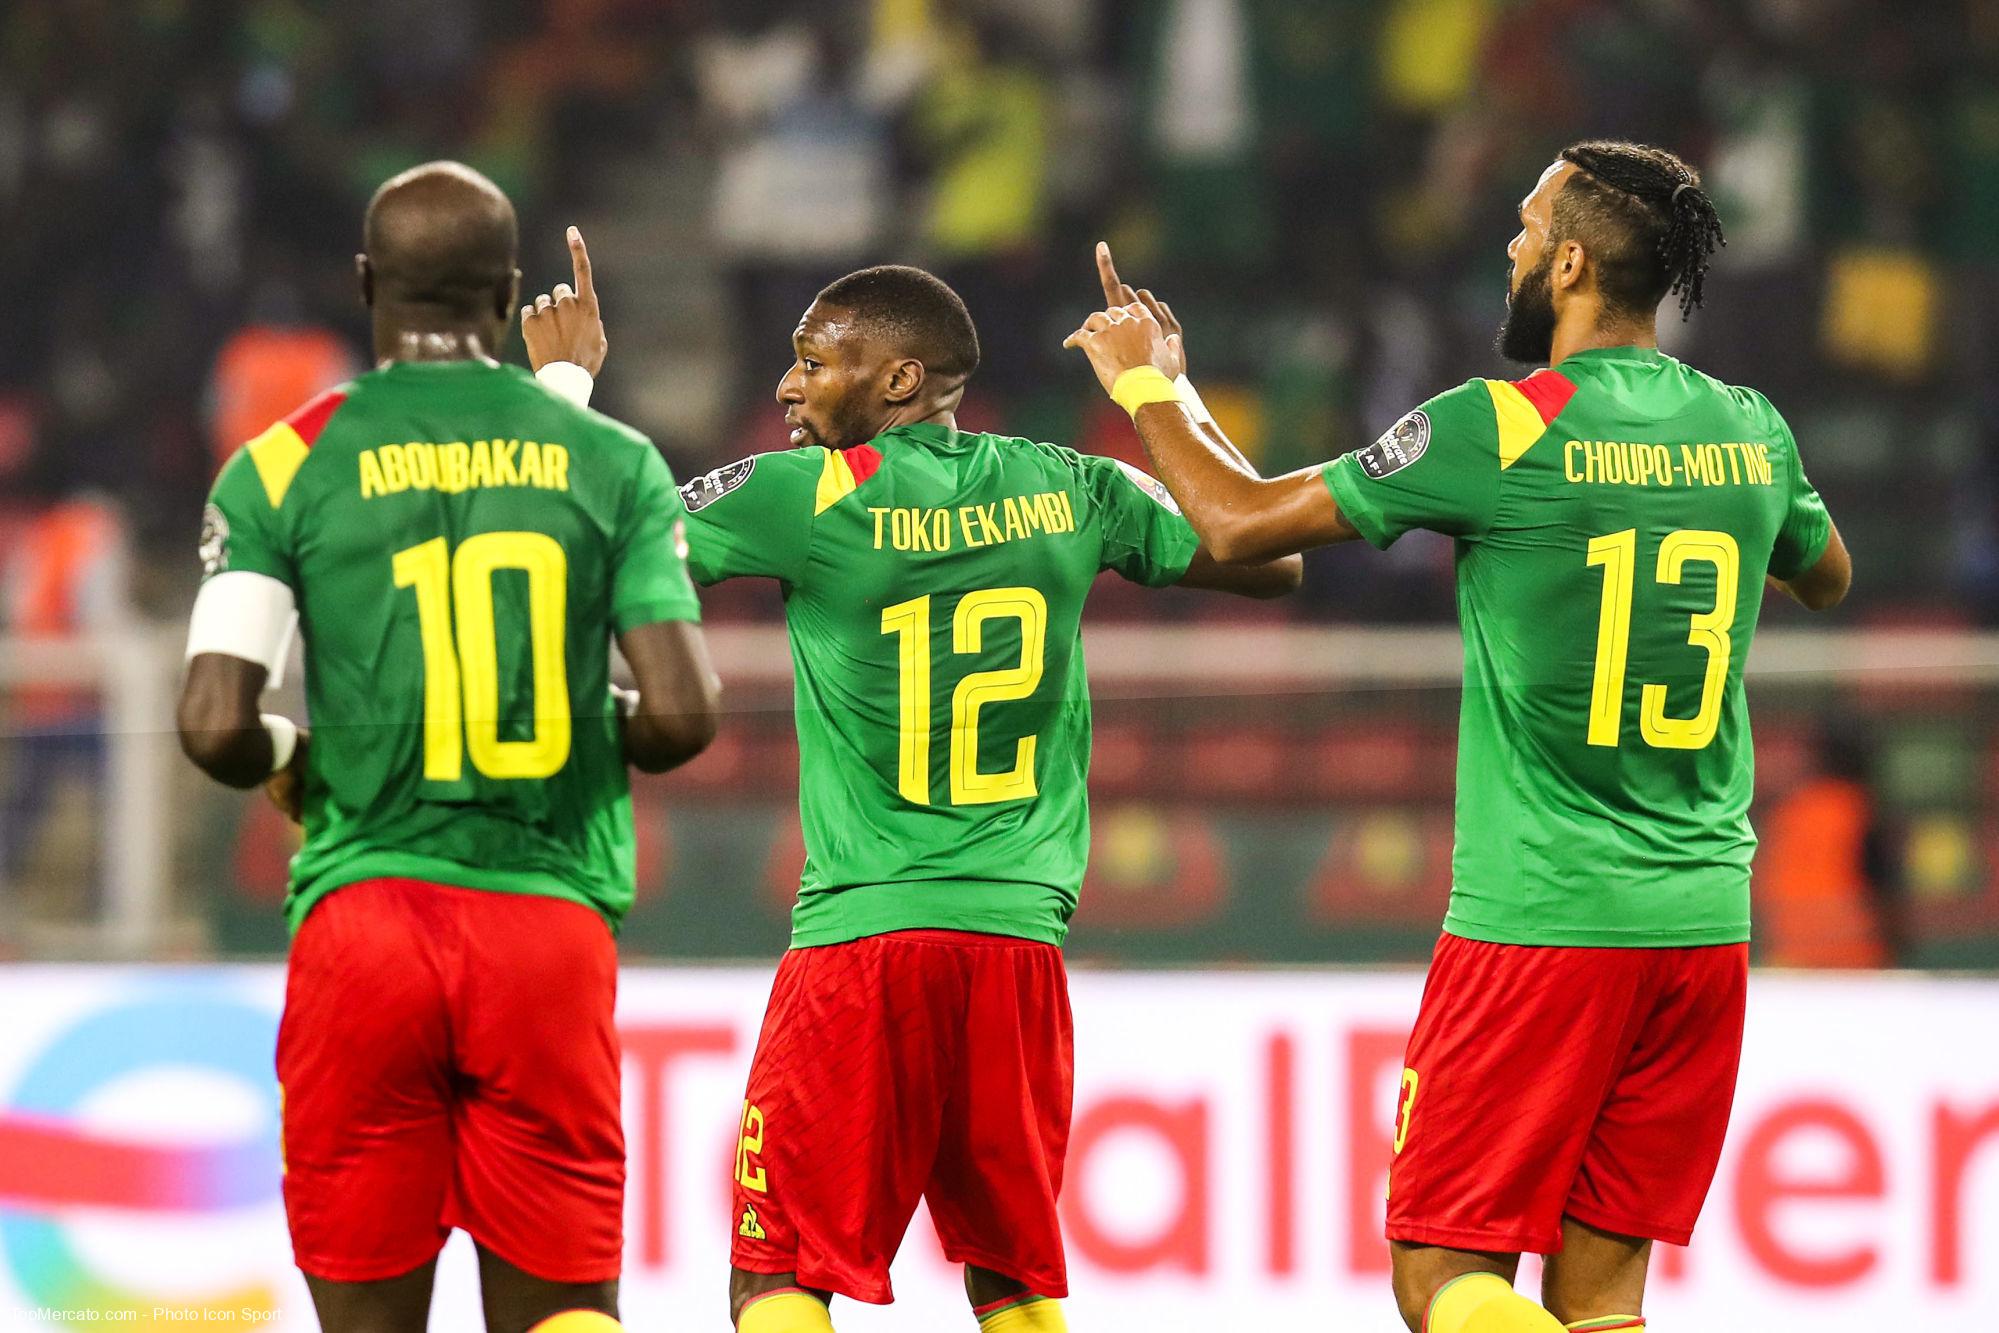 Gambie-Cameroun. Les compos officielles pour ce 1/4 de finale avec Barrow, Aboubakar, Toko Ekambi titulaires